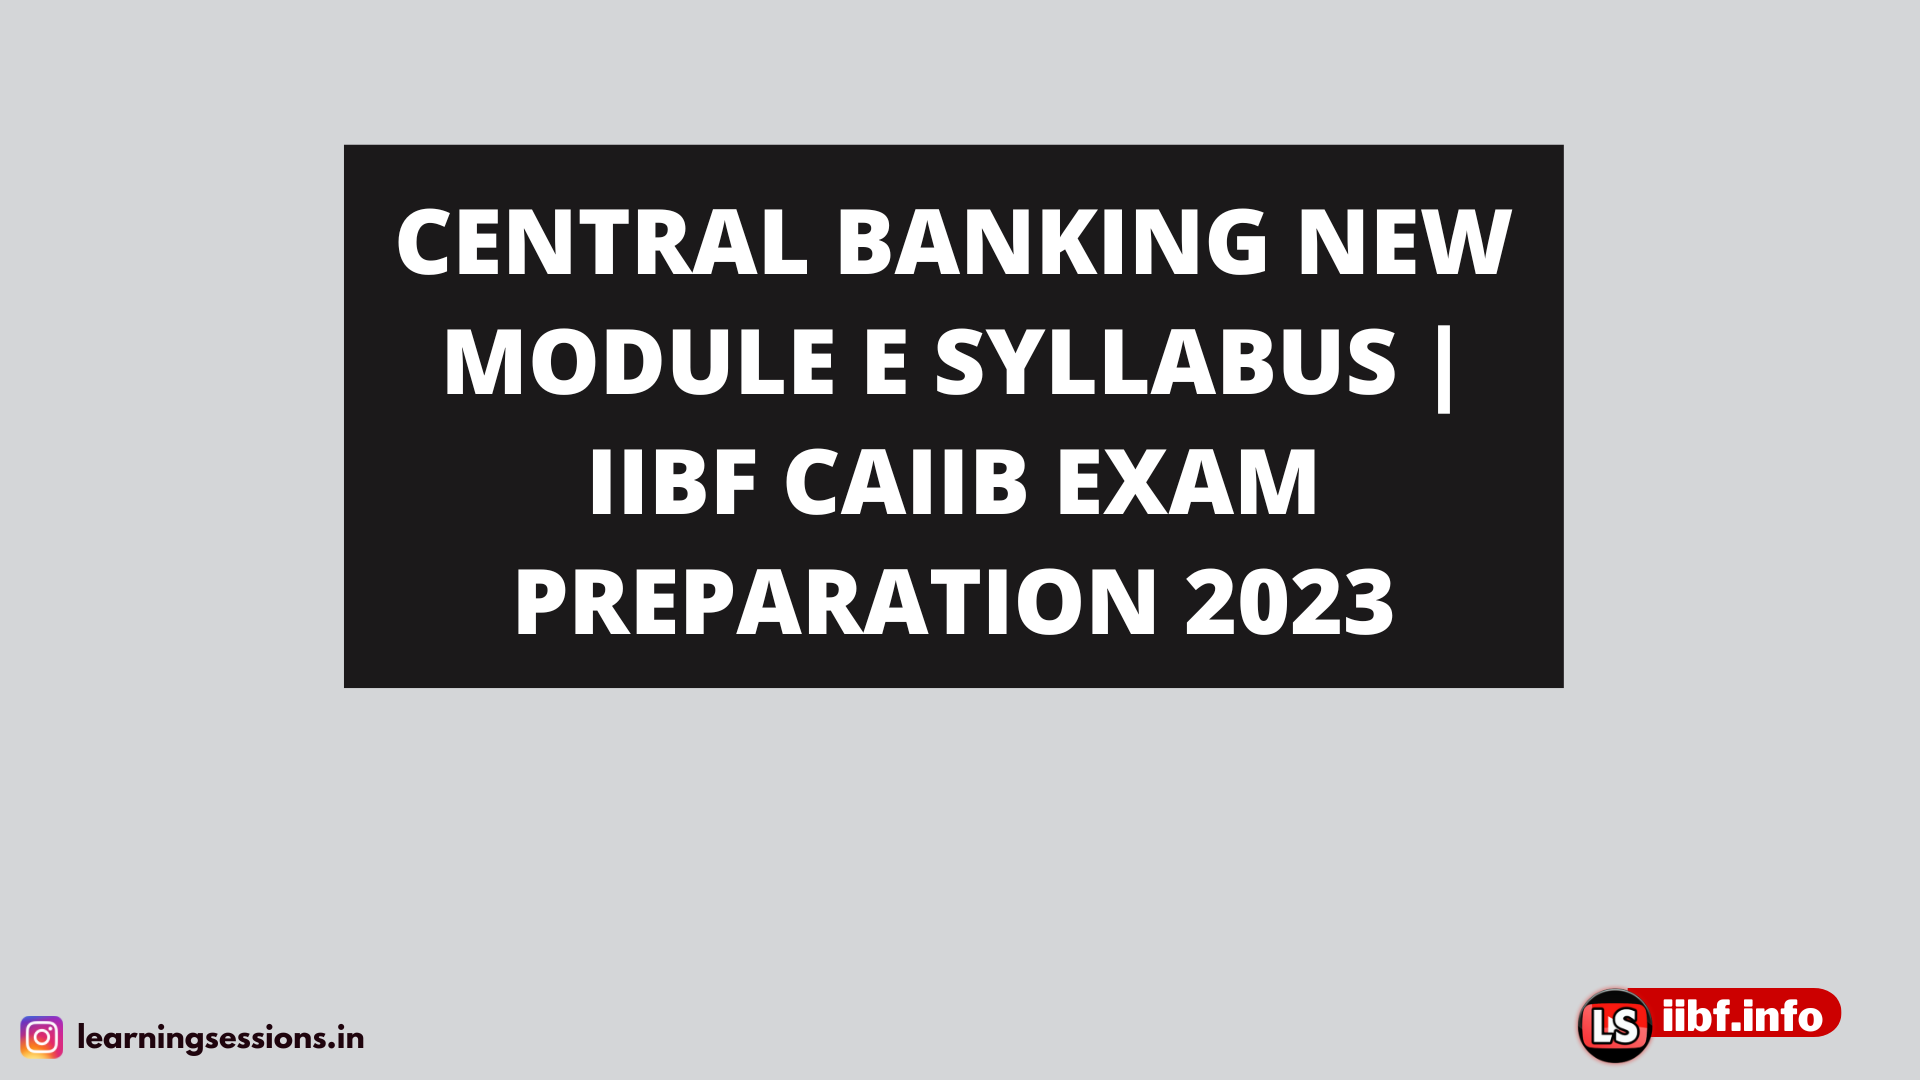 CENTRAL BANKING NEW MODULE E SYLLABUS | IIBF CAIIB EXAM PREPARATION 2023